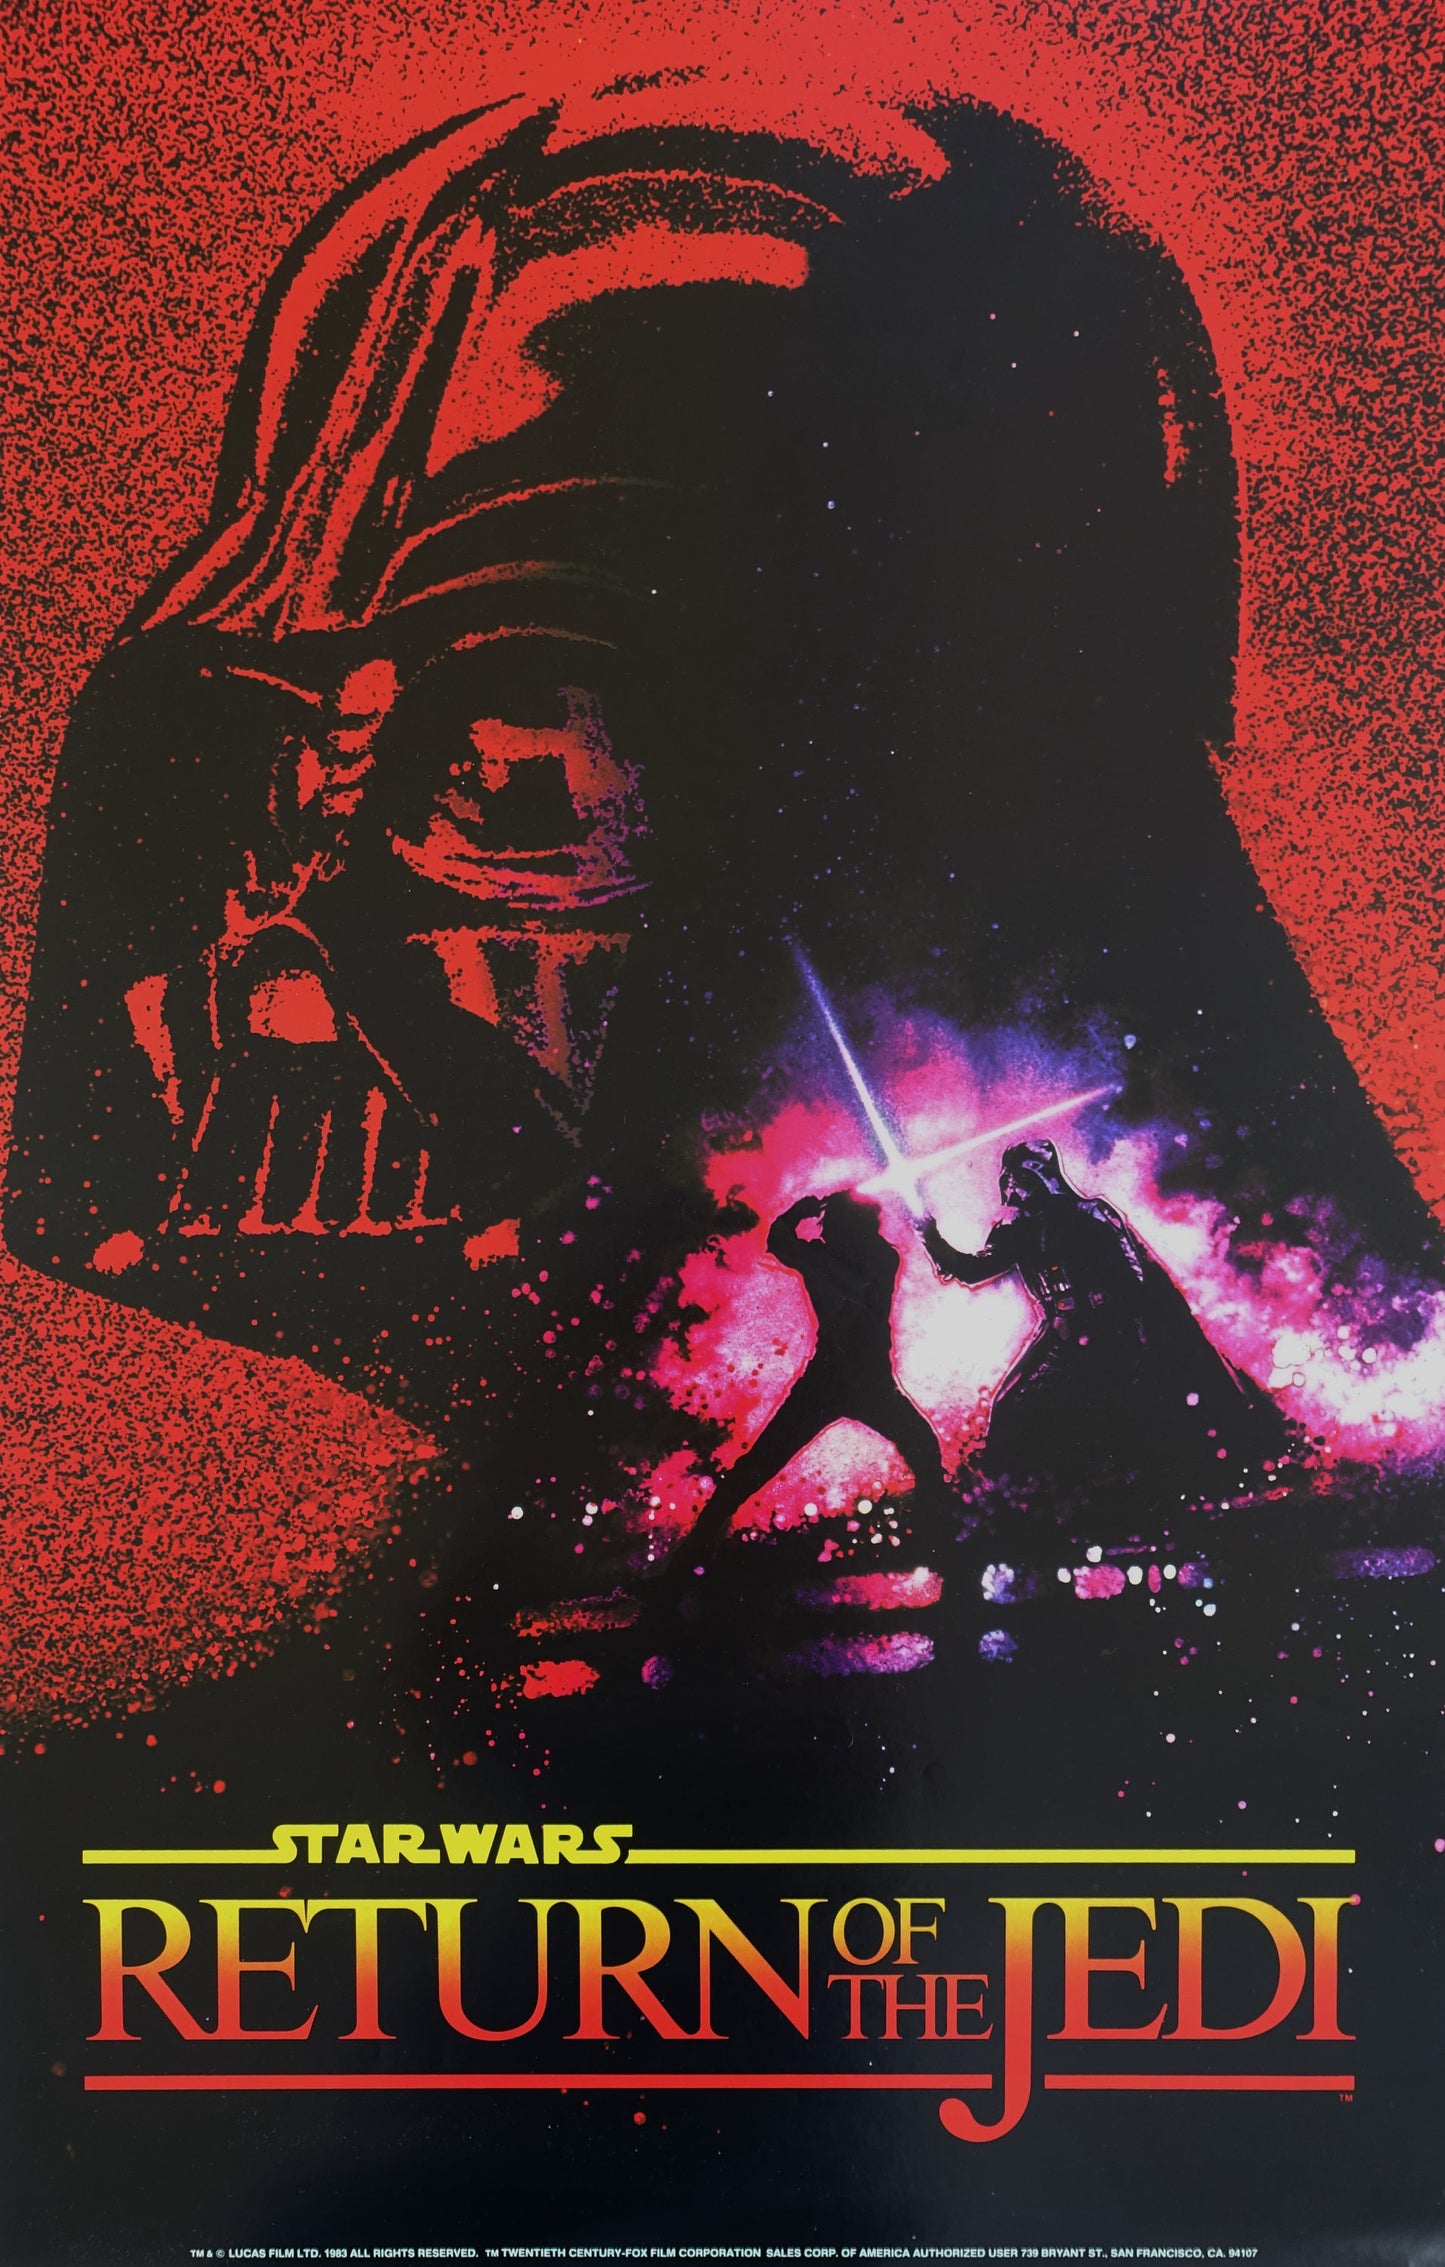 1983 Star Wars "Return of the Jedi" Movie Poster - Original Vintage Poster